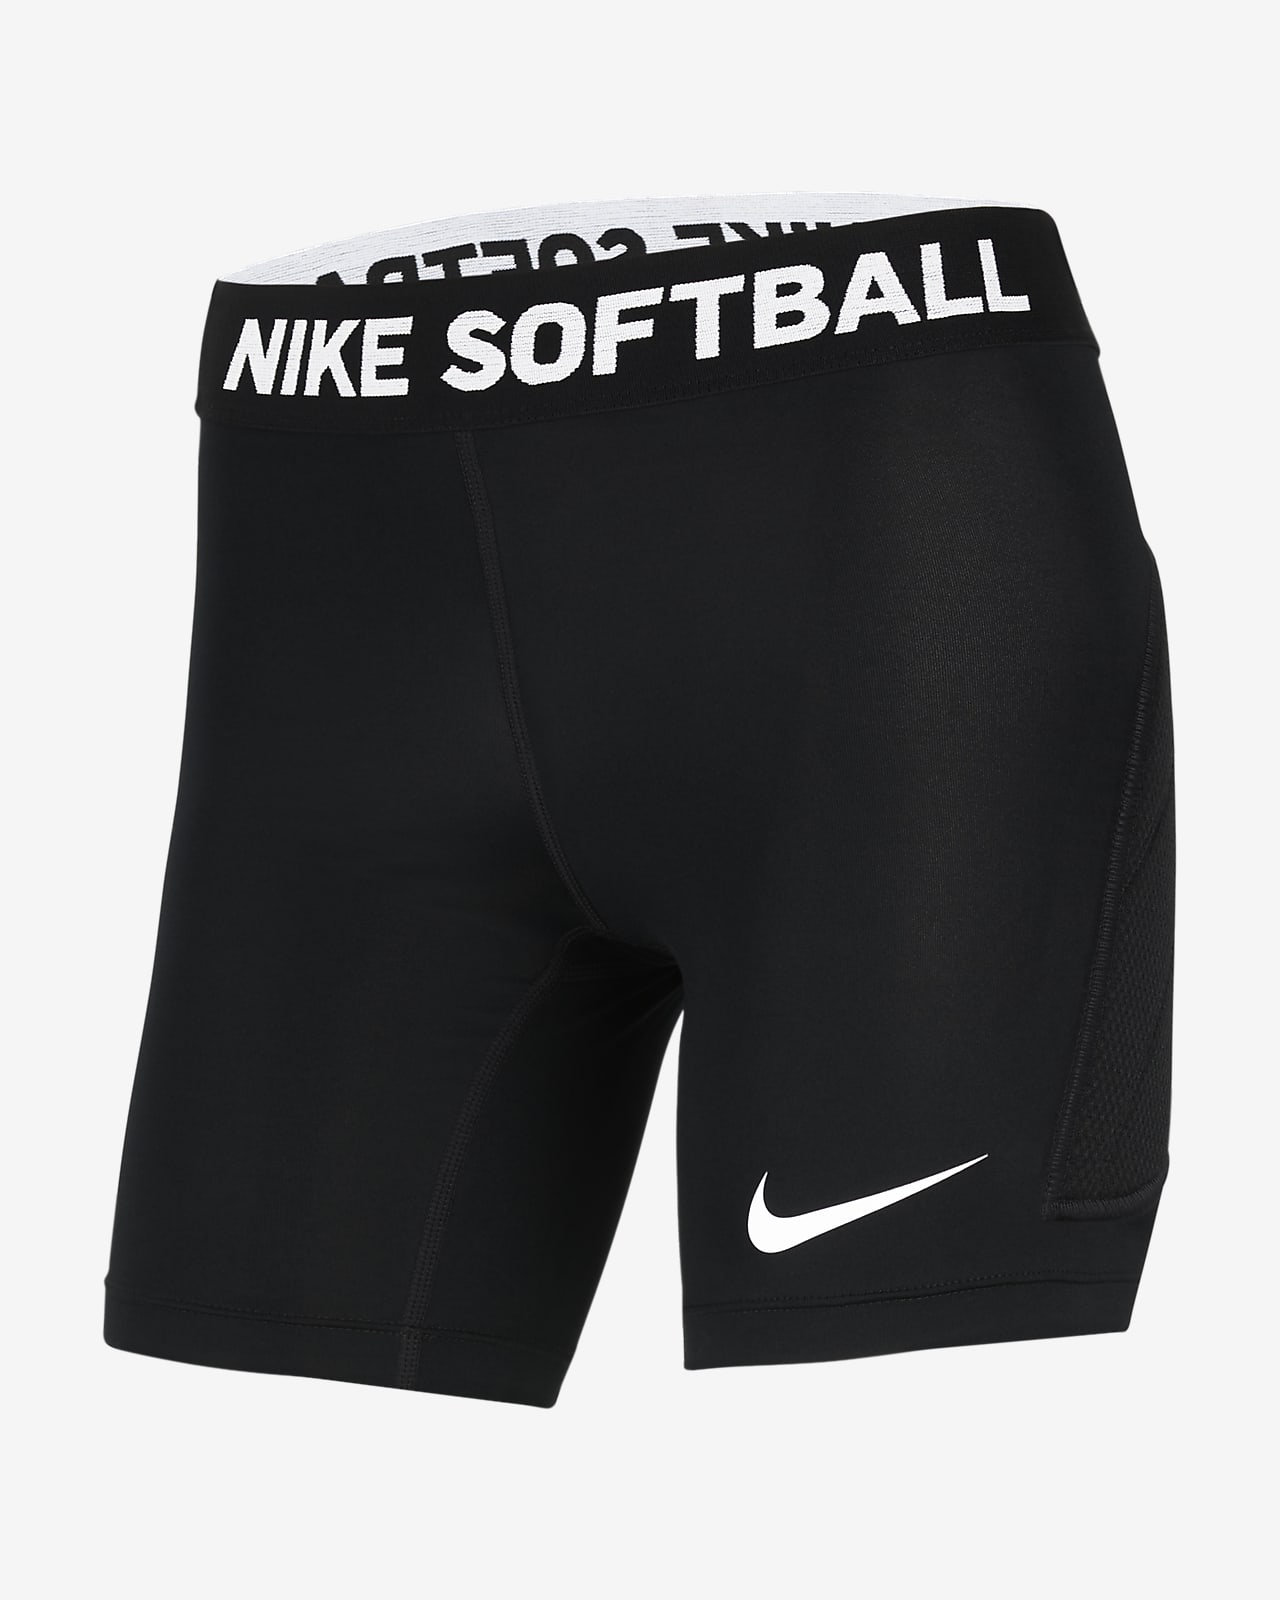 nike womens softball shorts